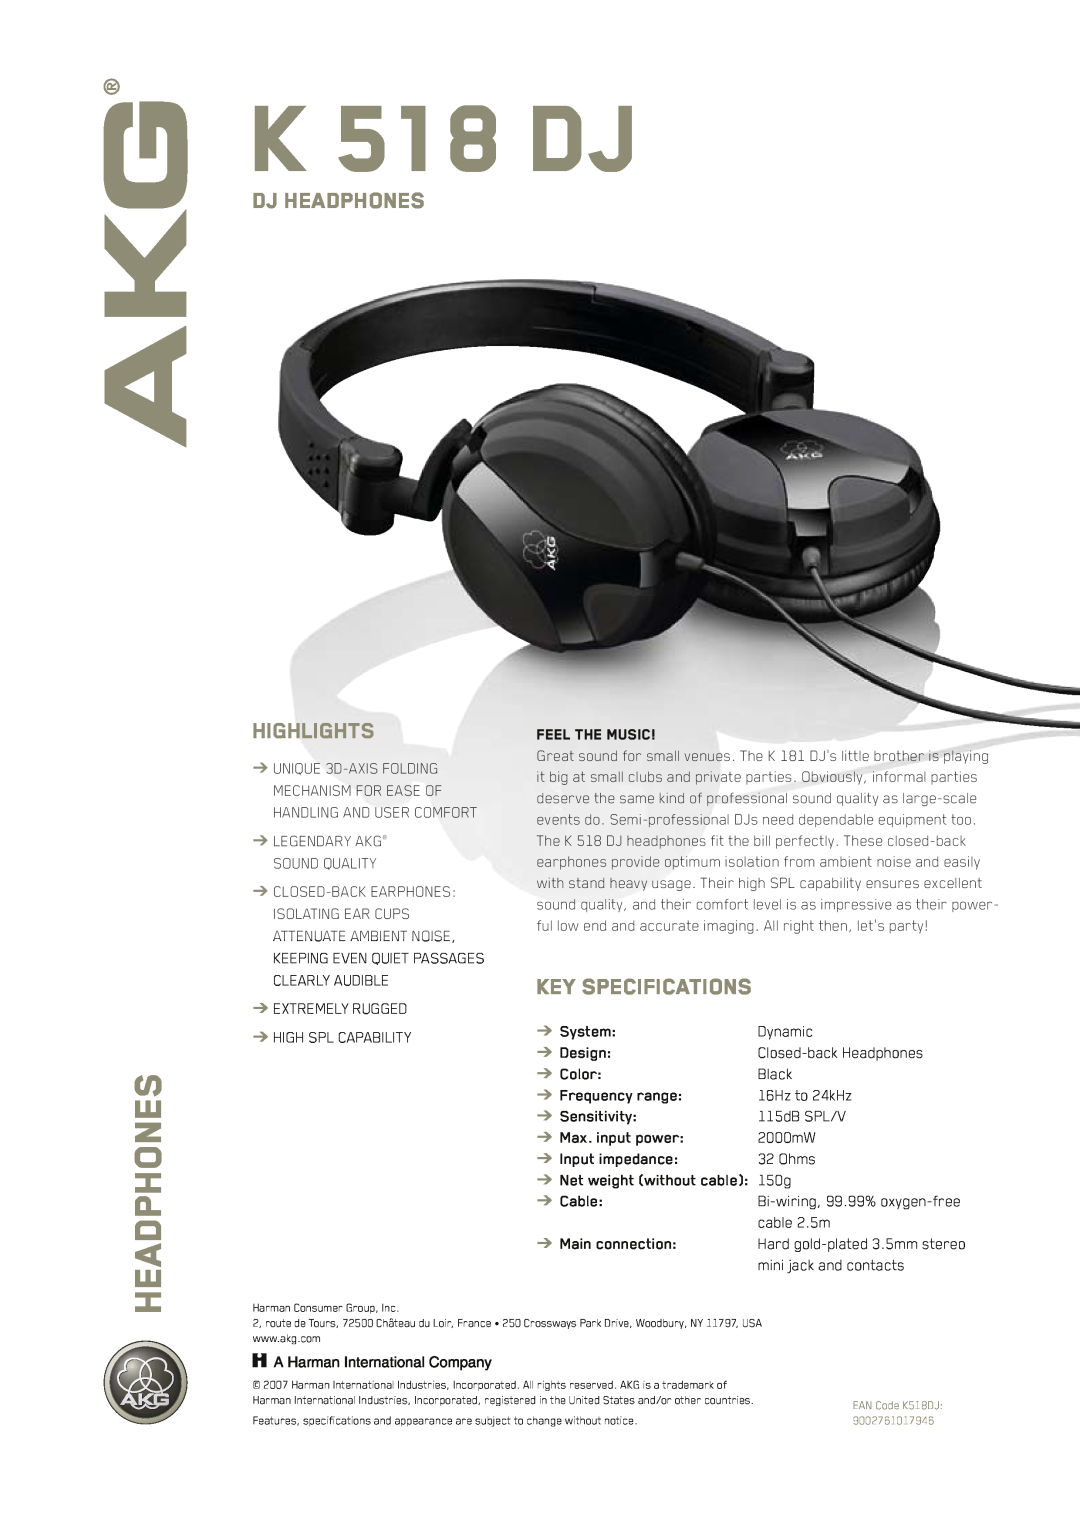 AKG Acoustics K 518 DJ specifications Dj Headphones, Highlights, Key Specifications 